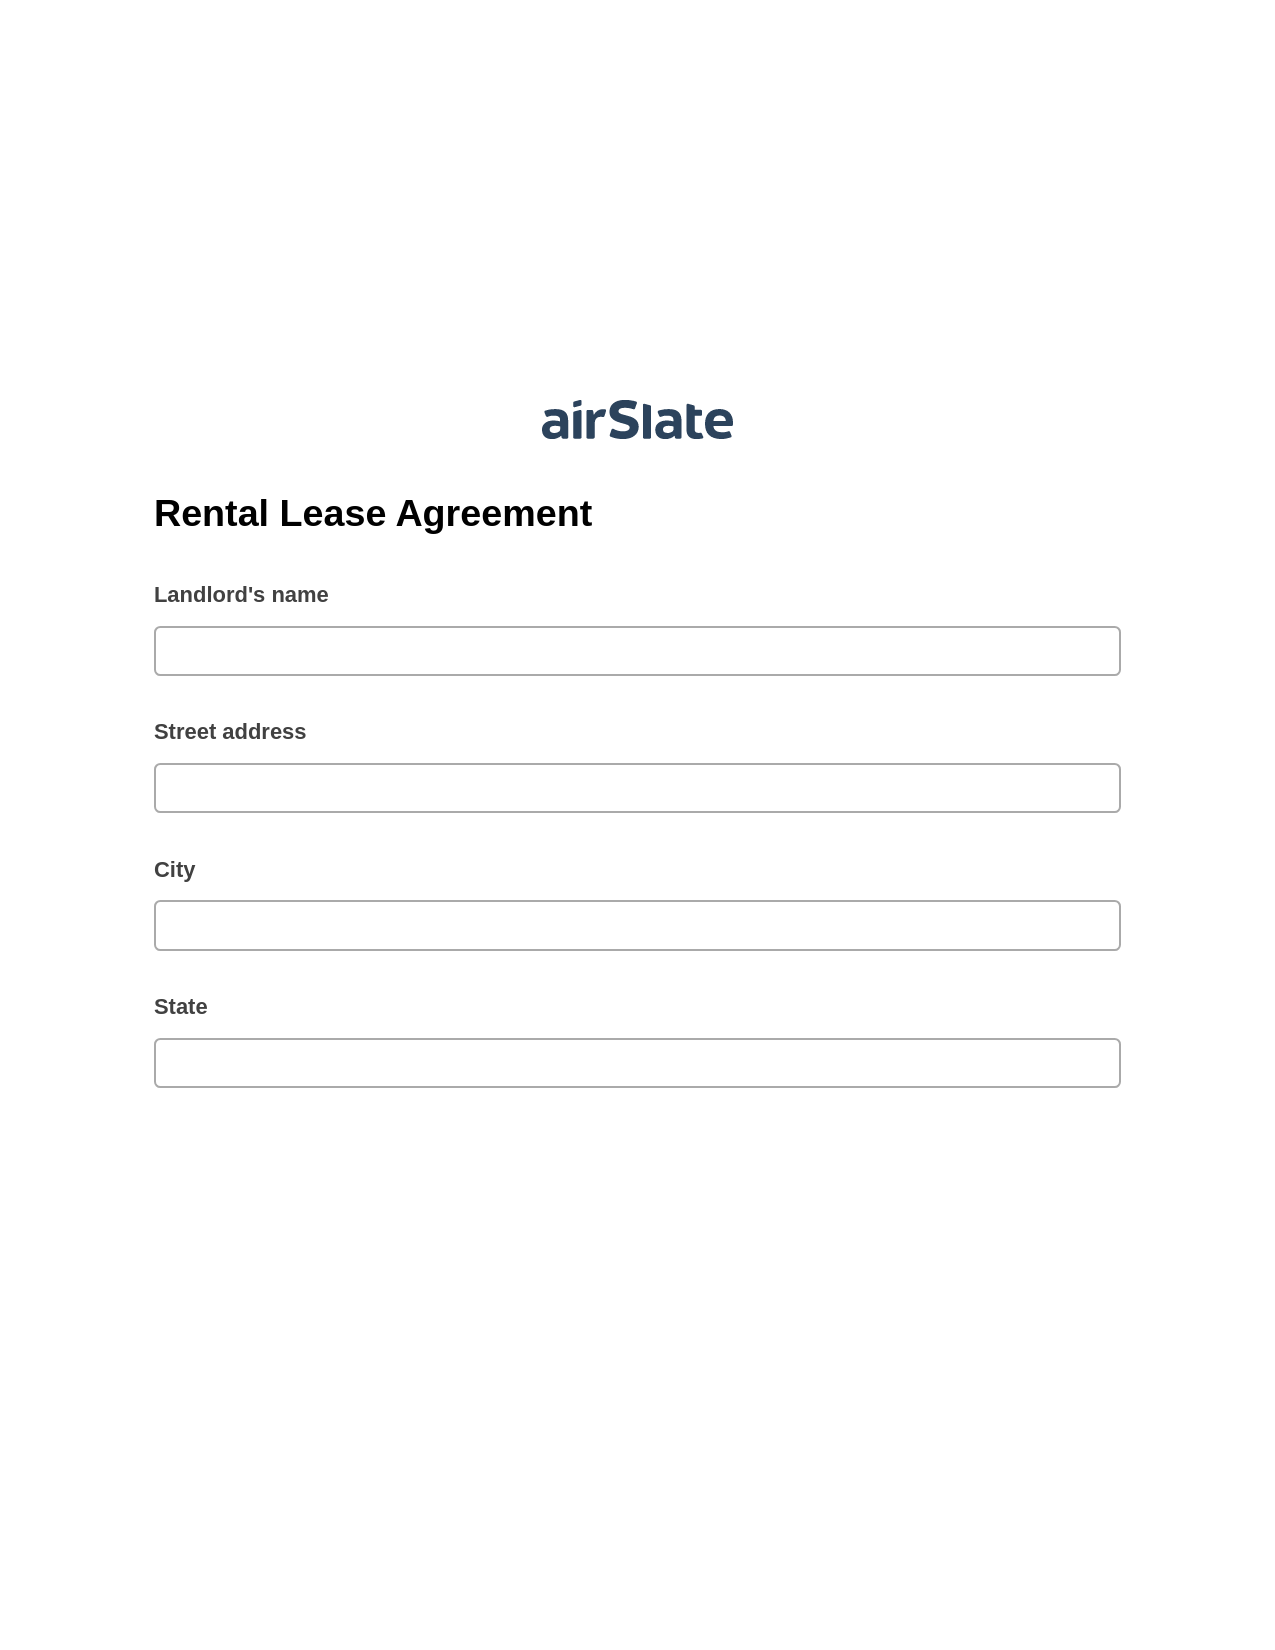 Rental Lease Agreement Pre-fill from Excel Spreadsheet Dropdown Options Bot, Google Cloud Print Bot, Slack Notification Postfinish Bot